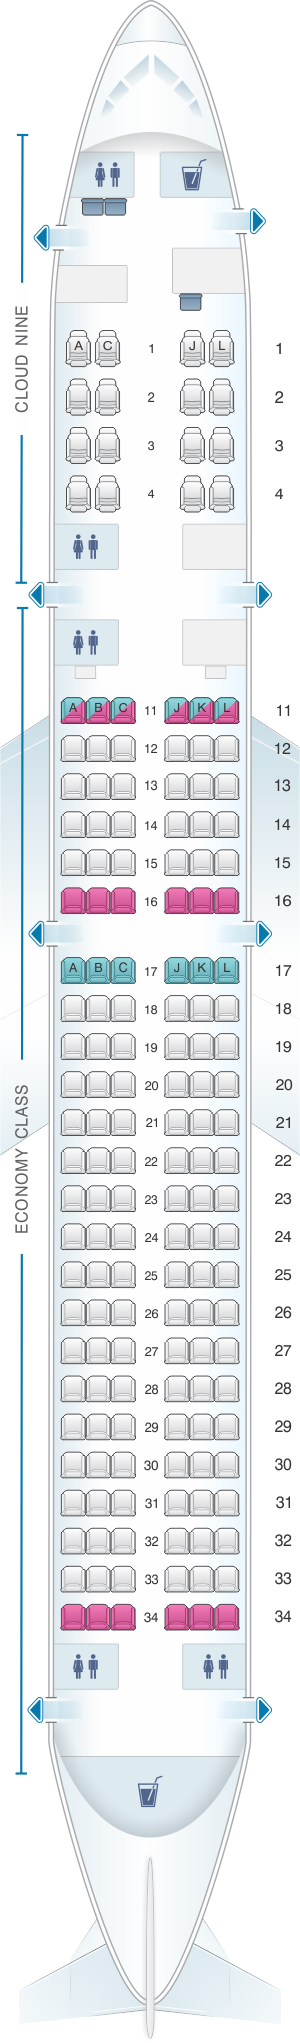 Seat map for Ethiopian Boeing B757 200 ER 160pax